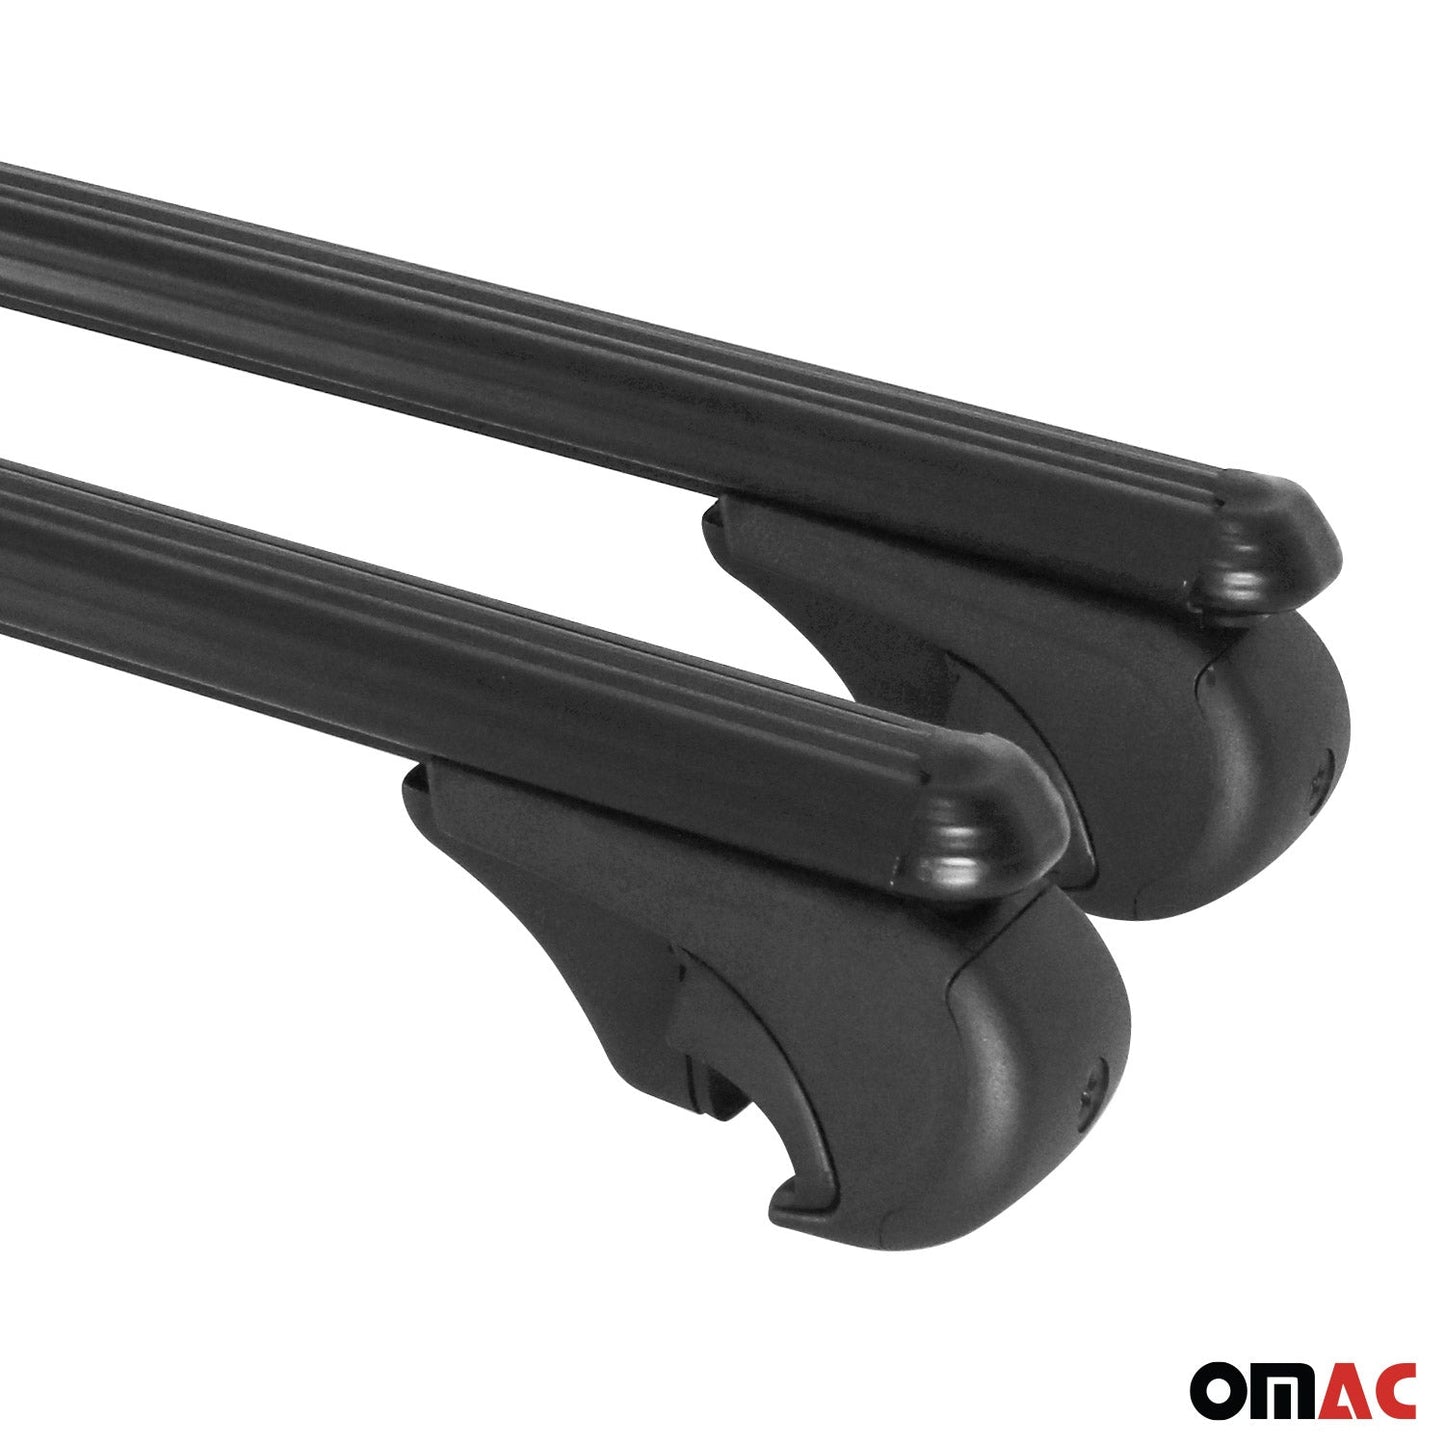 OMAC Lockable Roof Rack Cross Bars Luggage Carrier for Ford Explorer 2002-2005 Black 26799696929MB